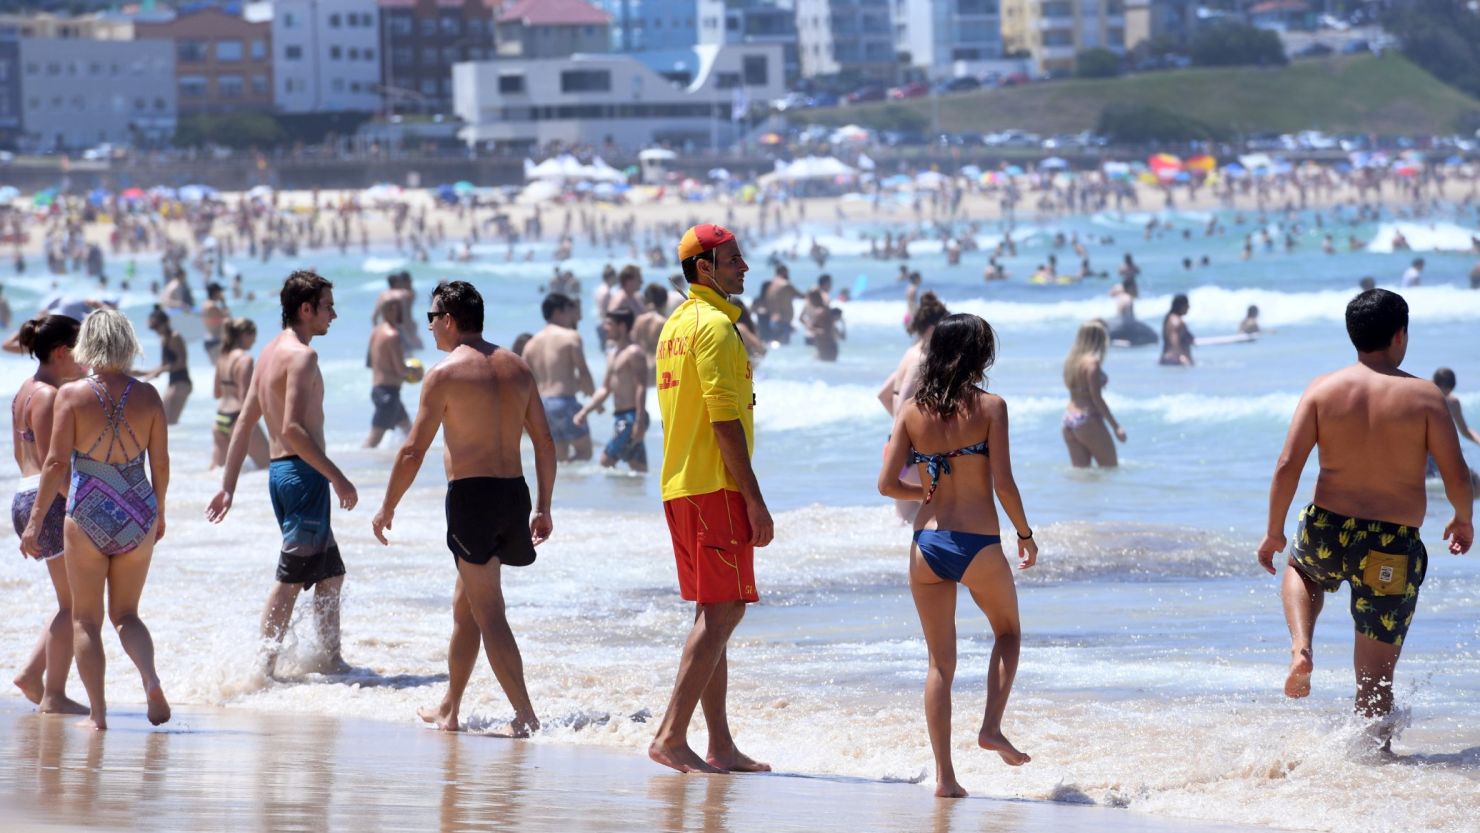 A lifeguard supervises swimmers at Sydney's Bondi Beach on Saturday, February 11.